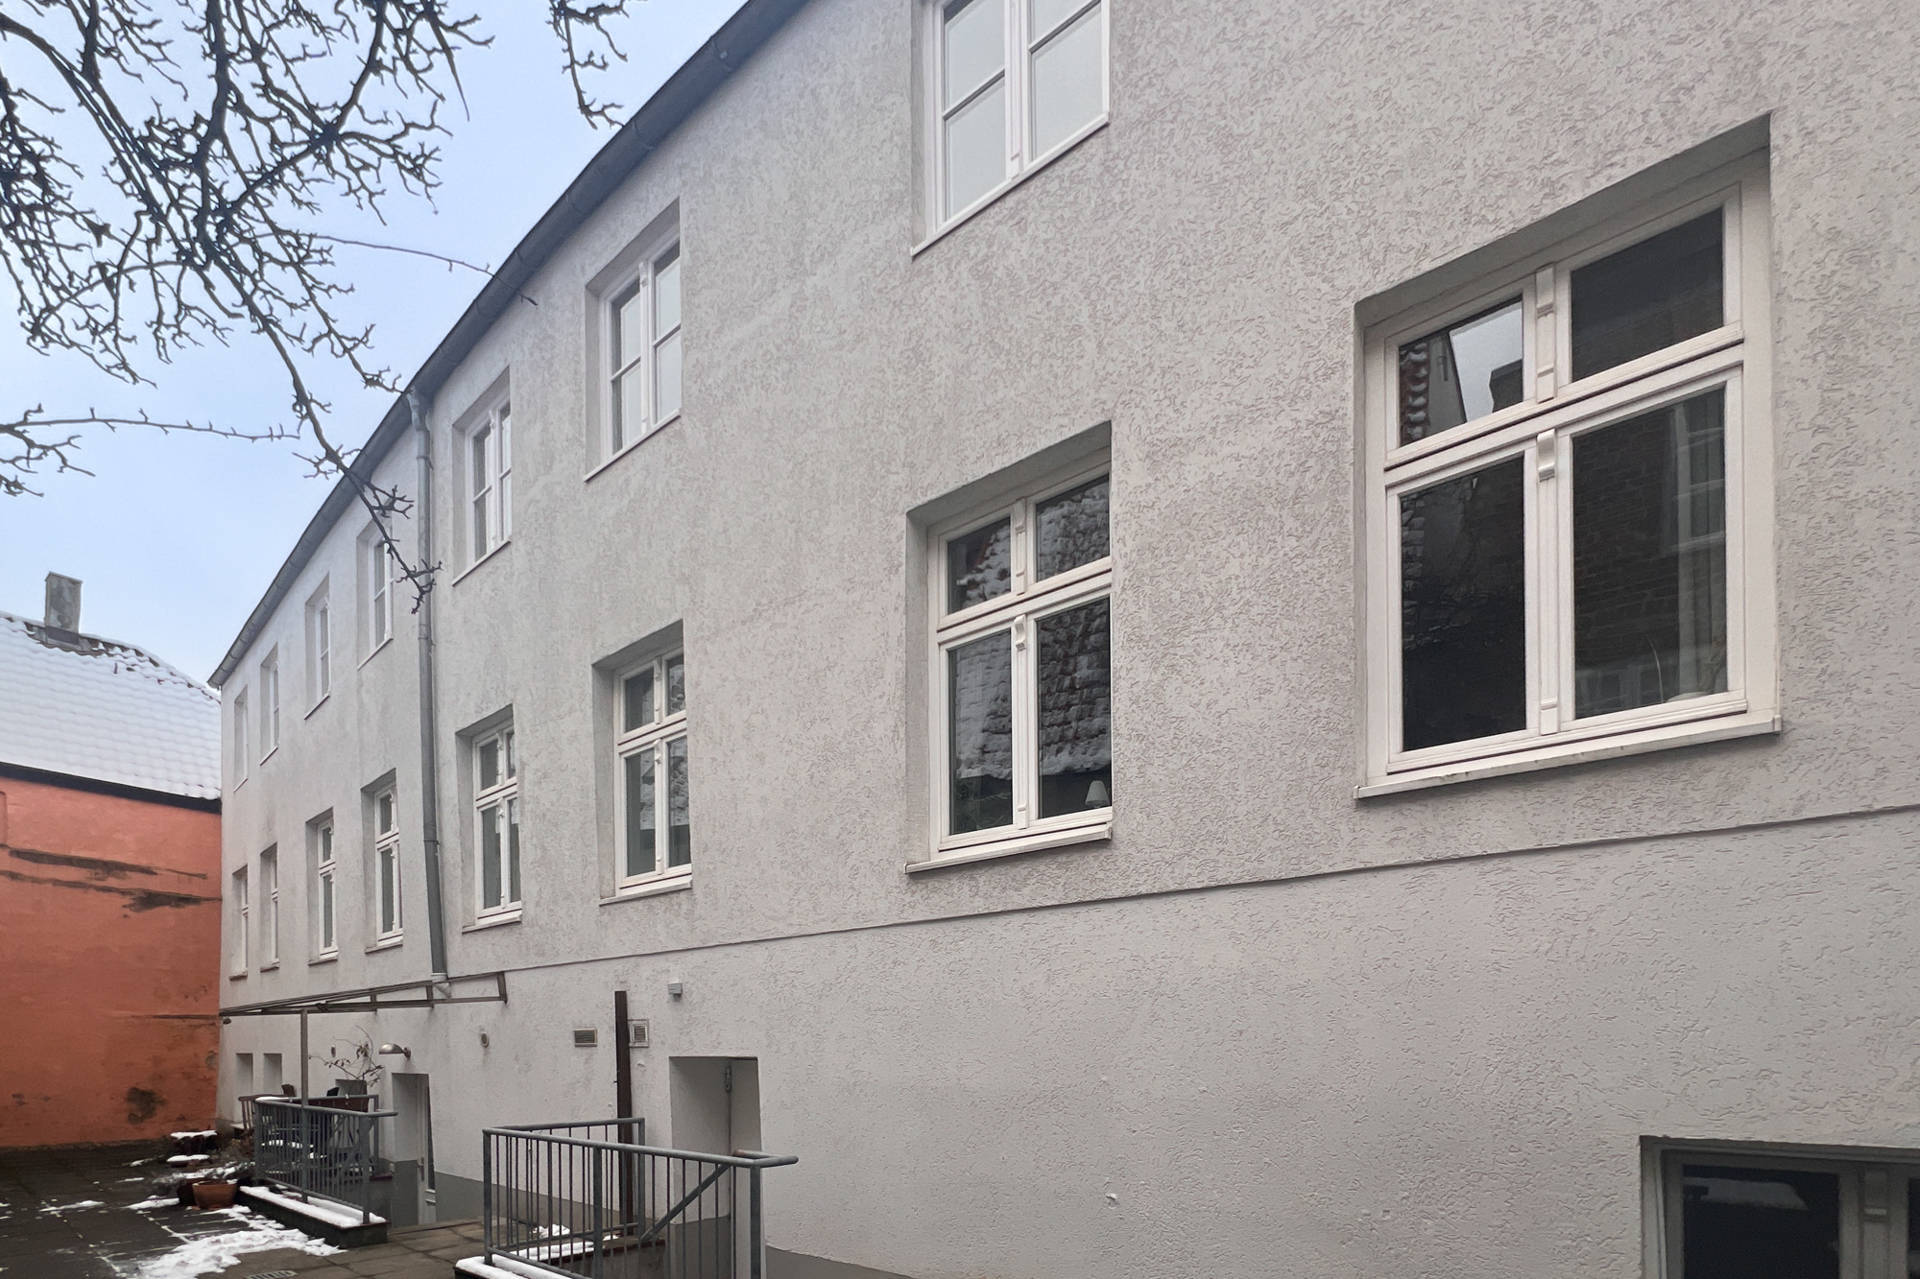 Immobilienangebot - Lübeck - Innenstadt - Alle - Lübeck: Gepflegtes Mehrfamilienhaus in angesagter Innenstadtlage